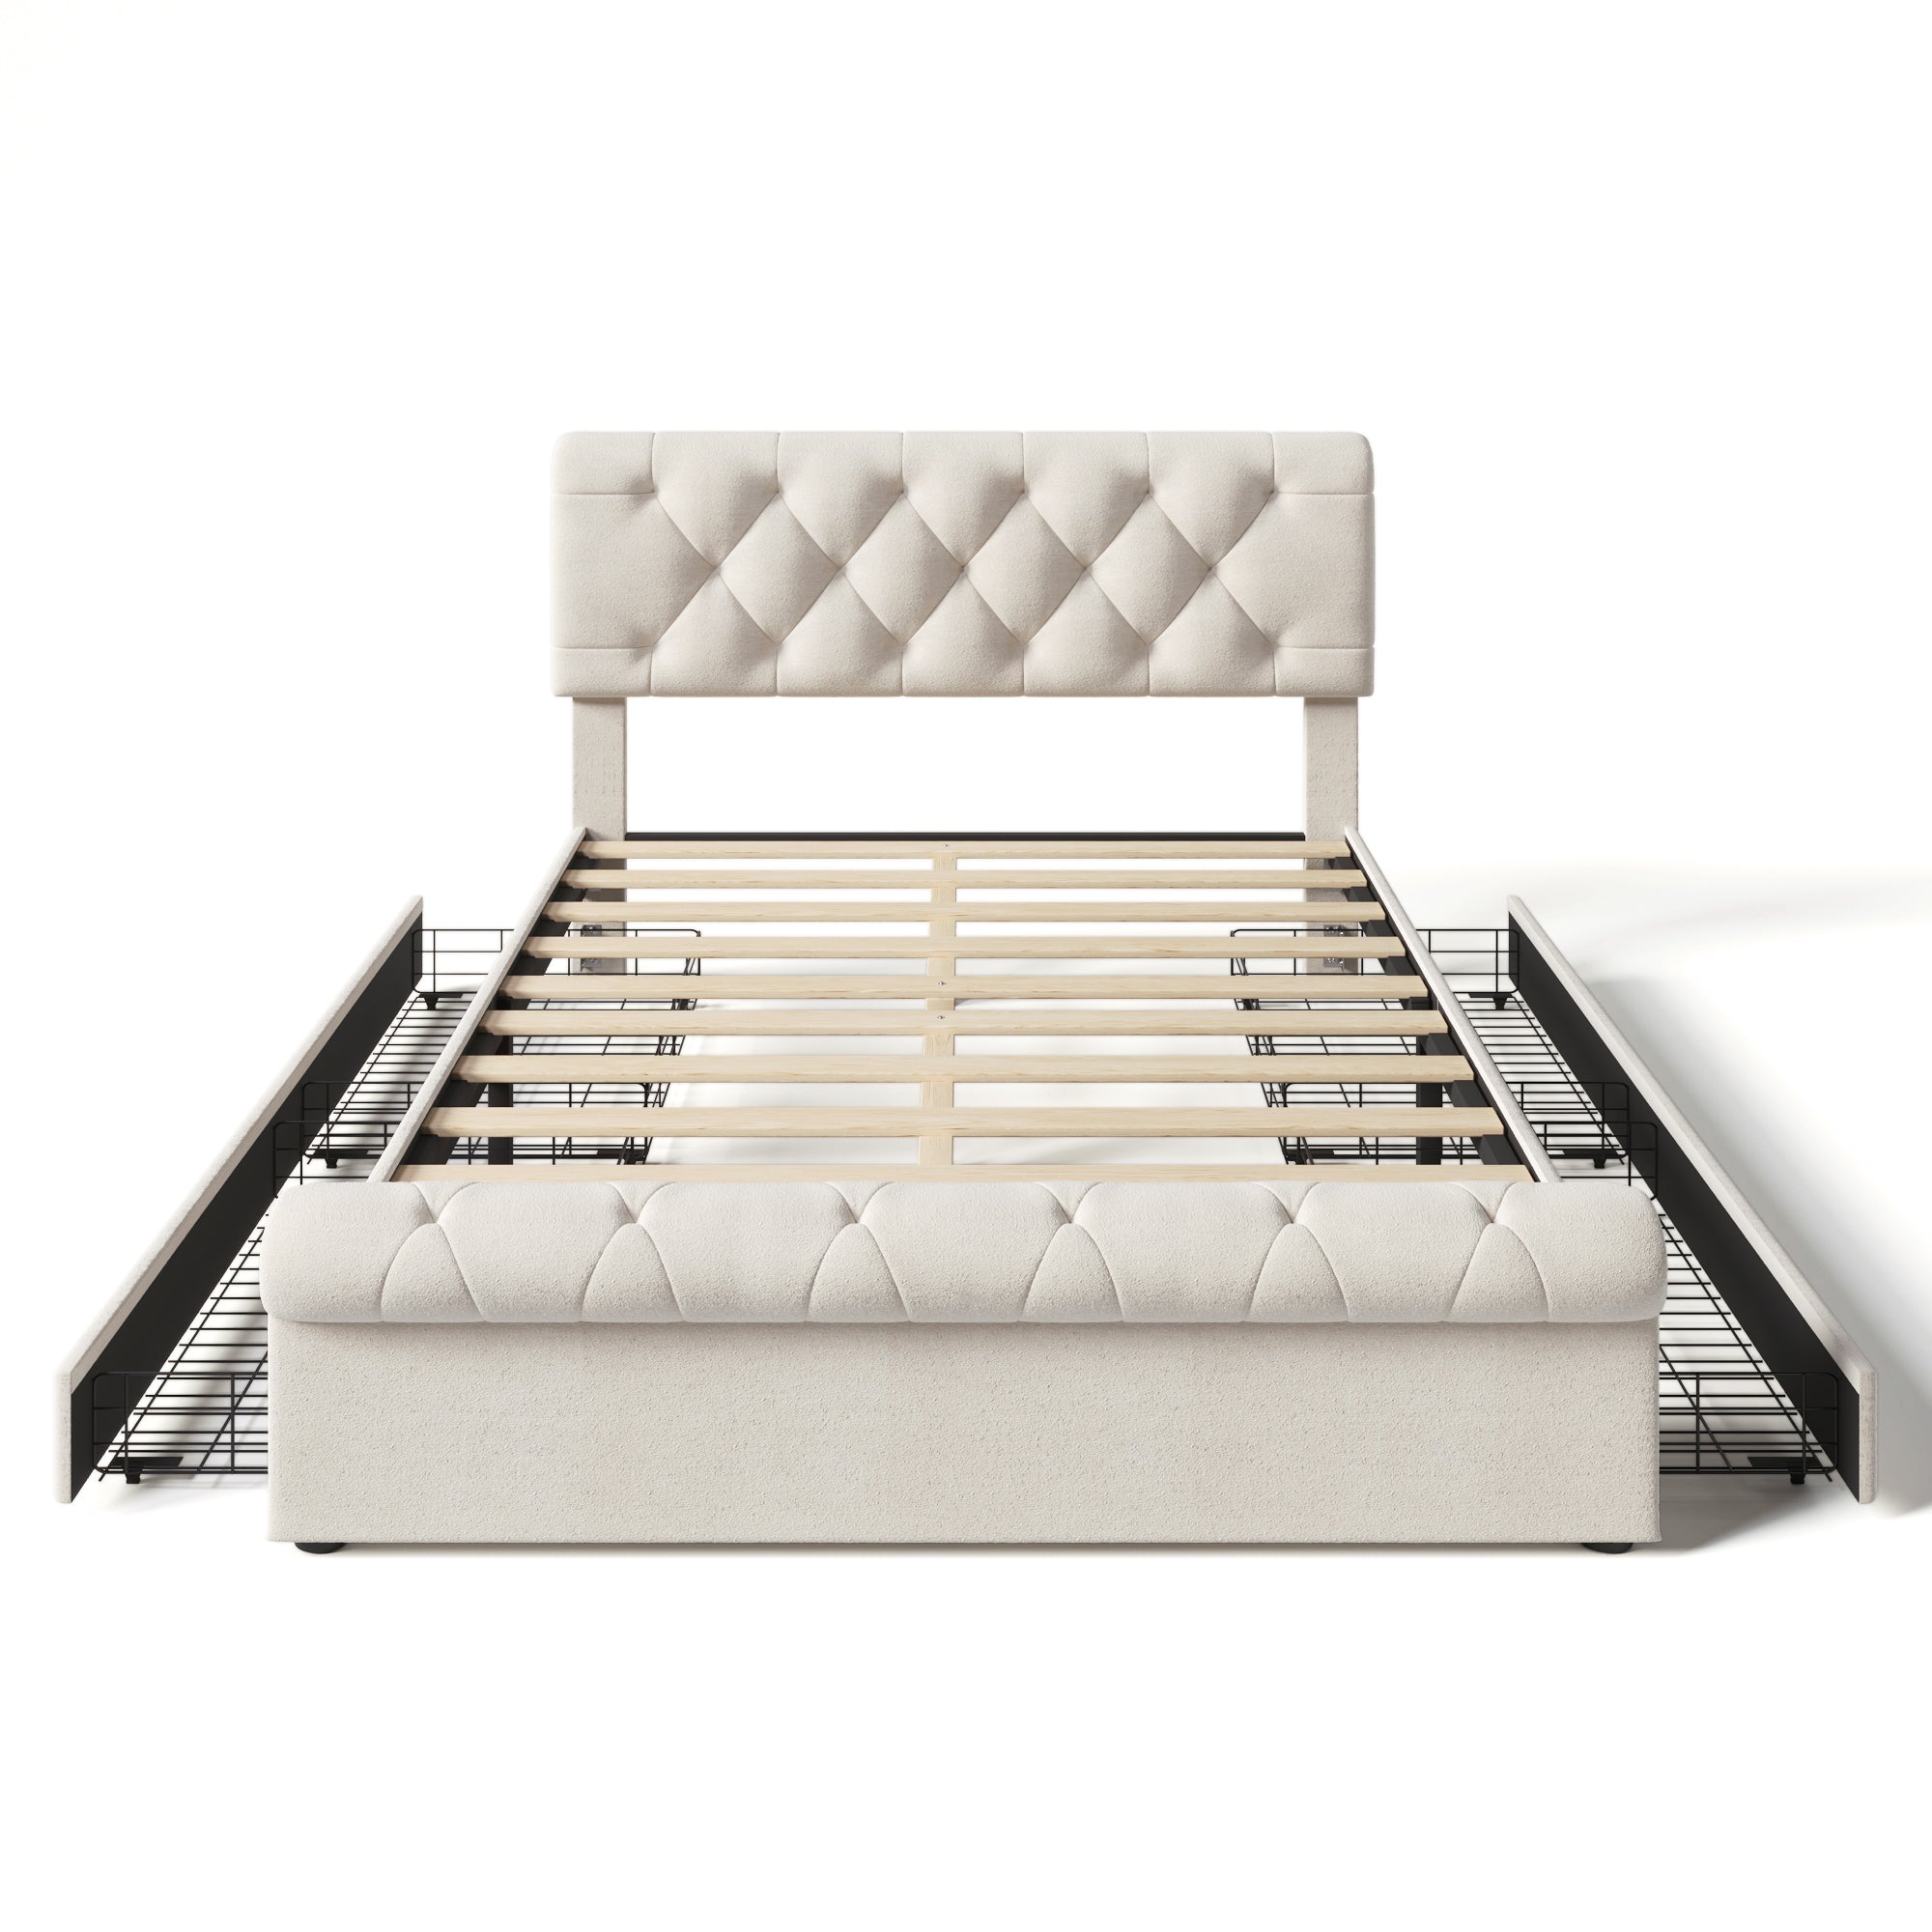 Bellemave® Upholstered Platform bed with Antique Curved Headboard and 4 Drawers Bellemave®